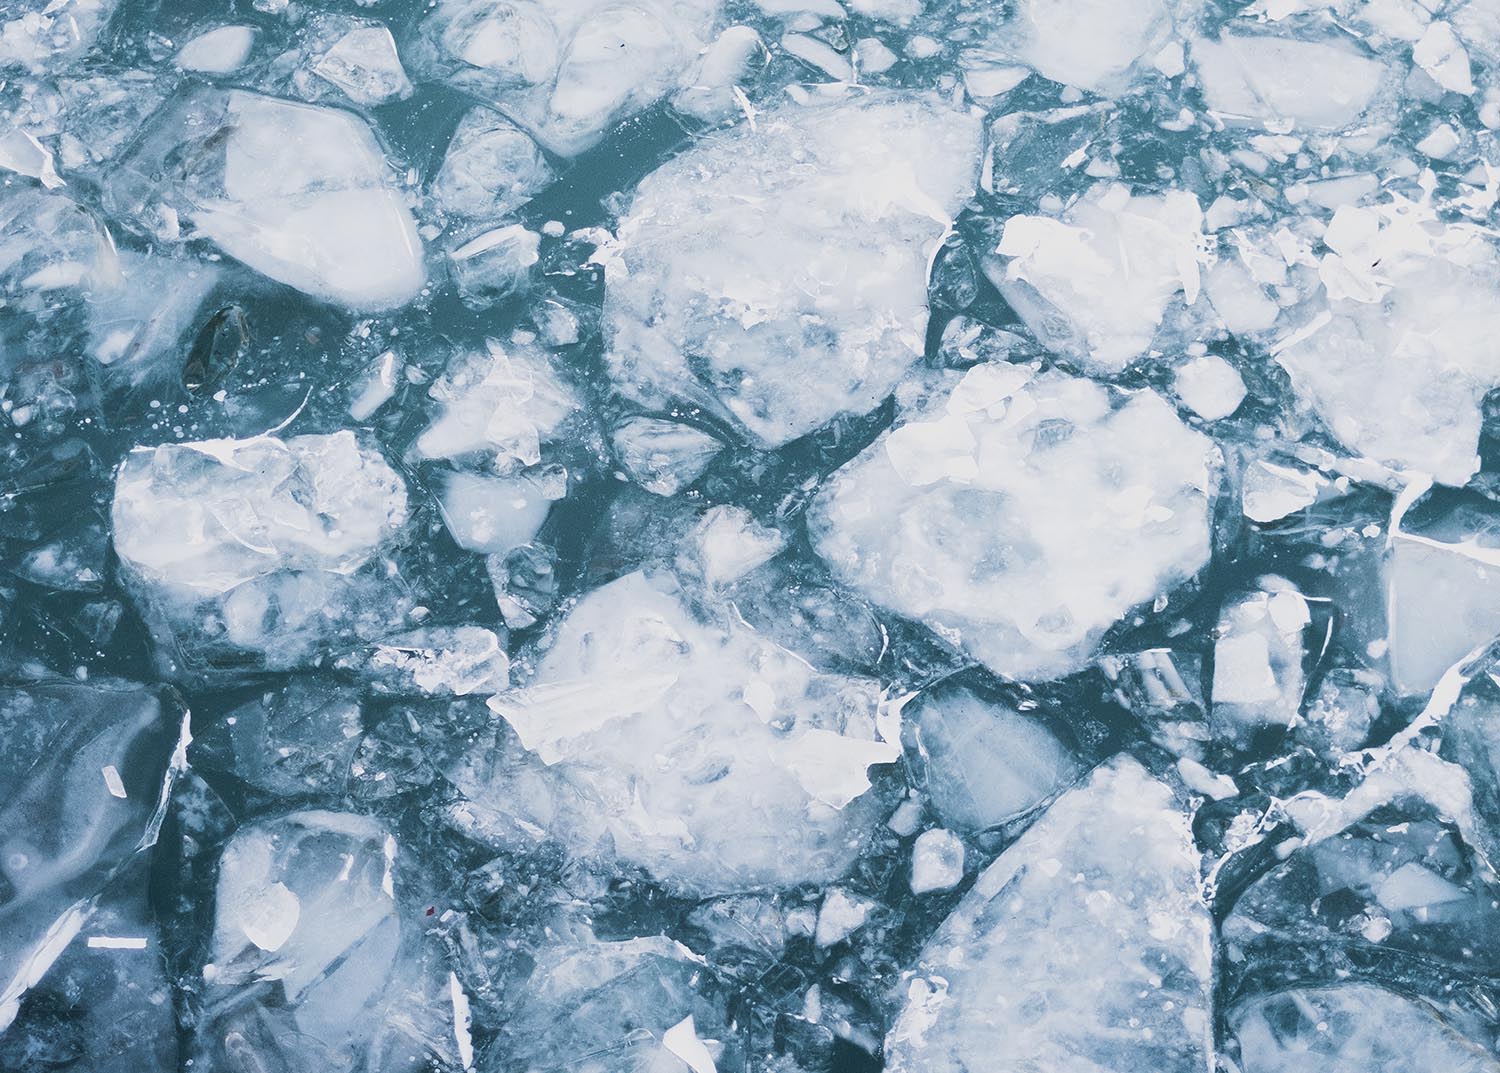 Broken ice on water